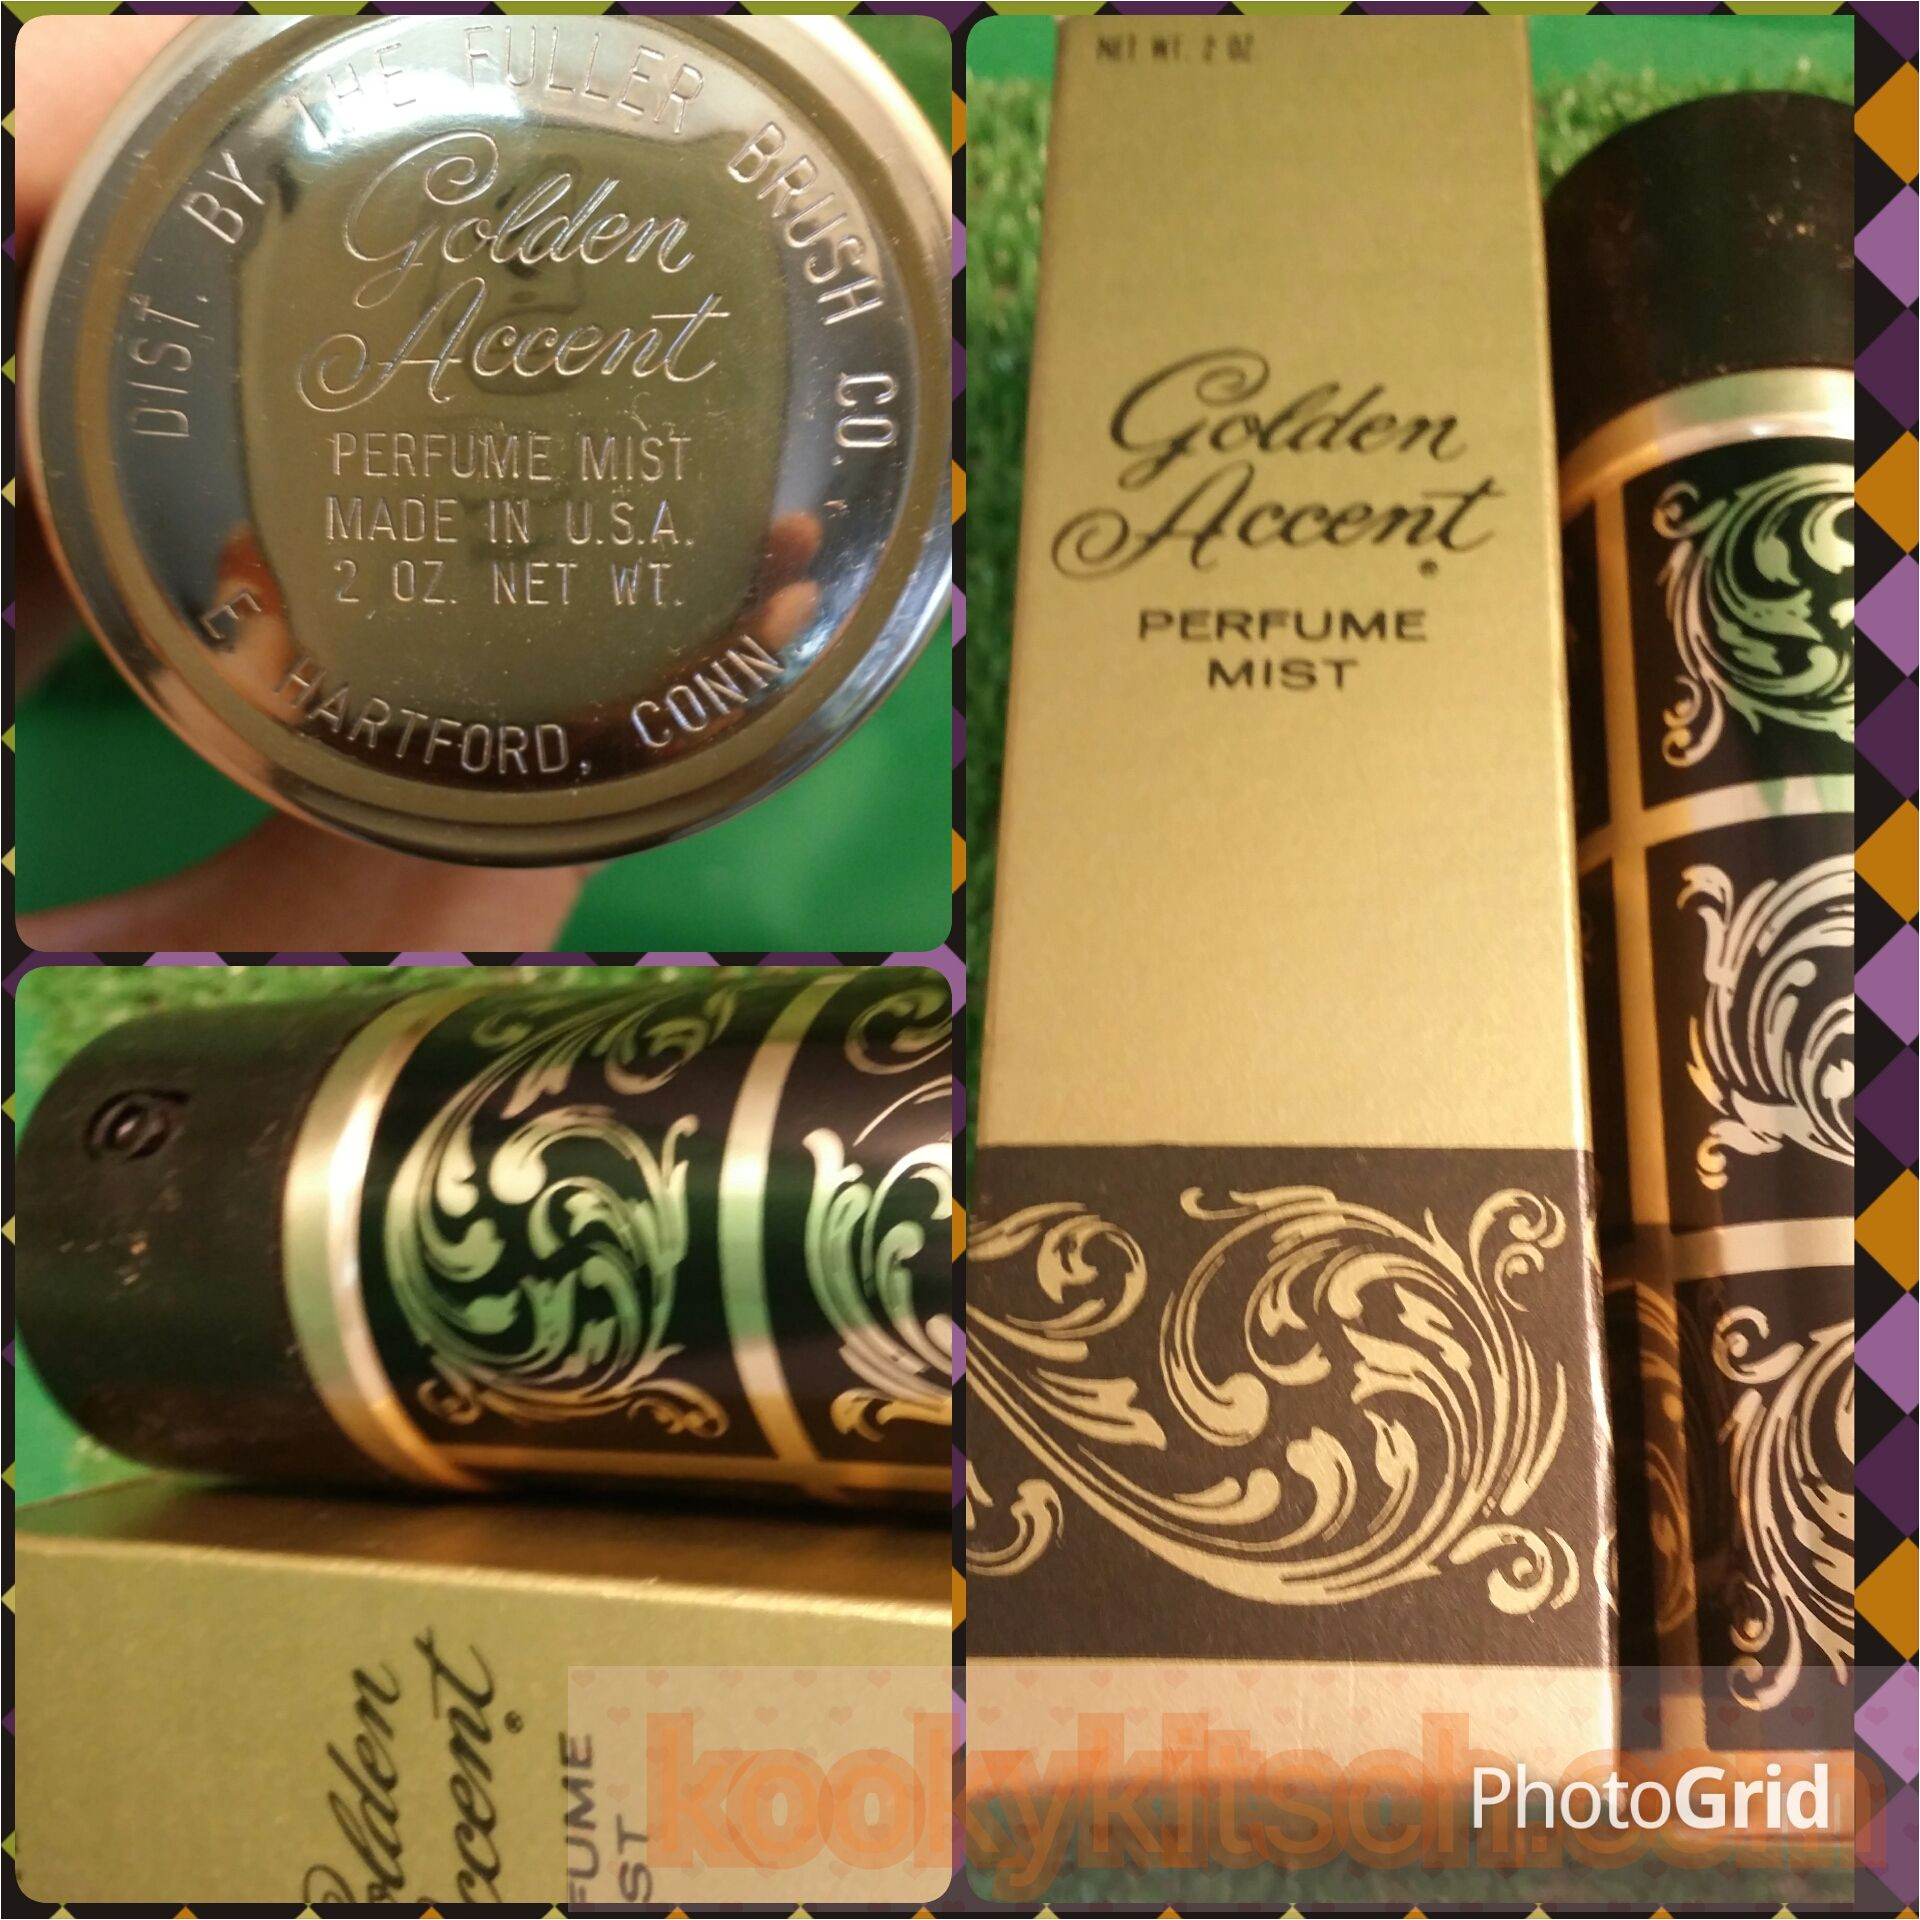 vintage fuller brush golden accent perfume mist bottle and box 2 oz